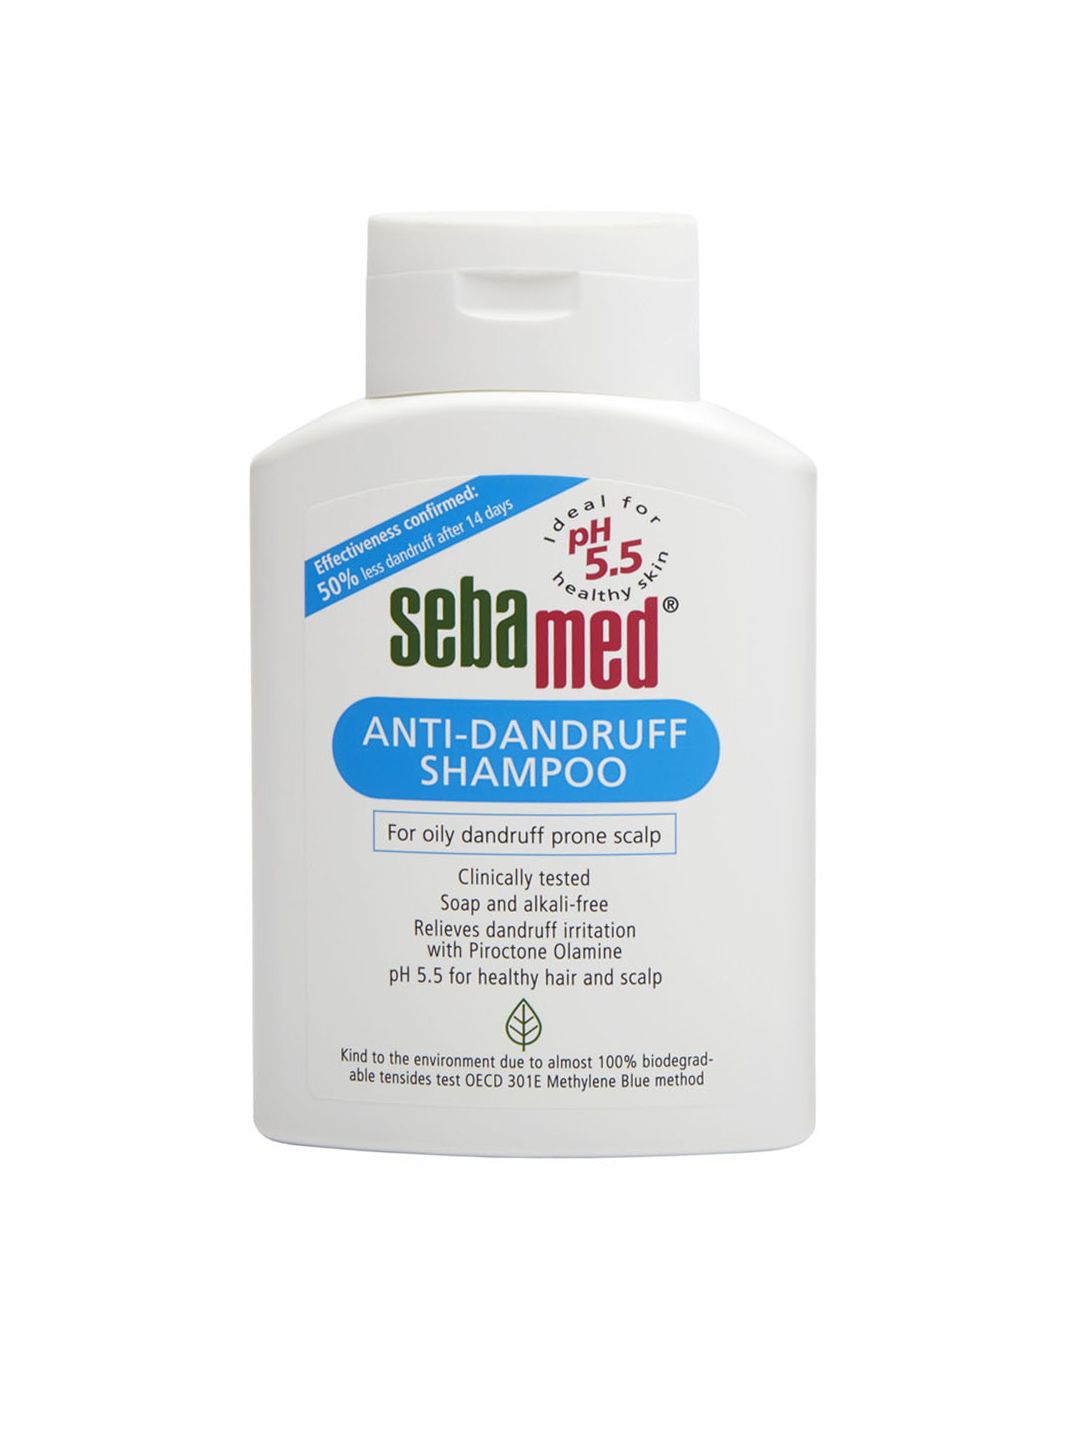 Sebamed Unisex Antidandruff Shampoo Ph5.5 200ml Price in India